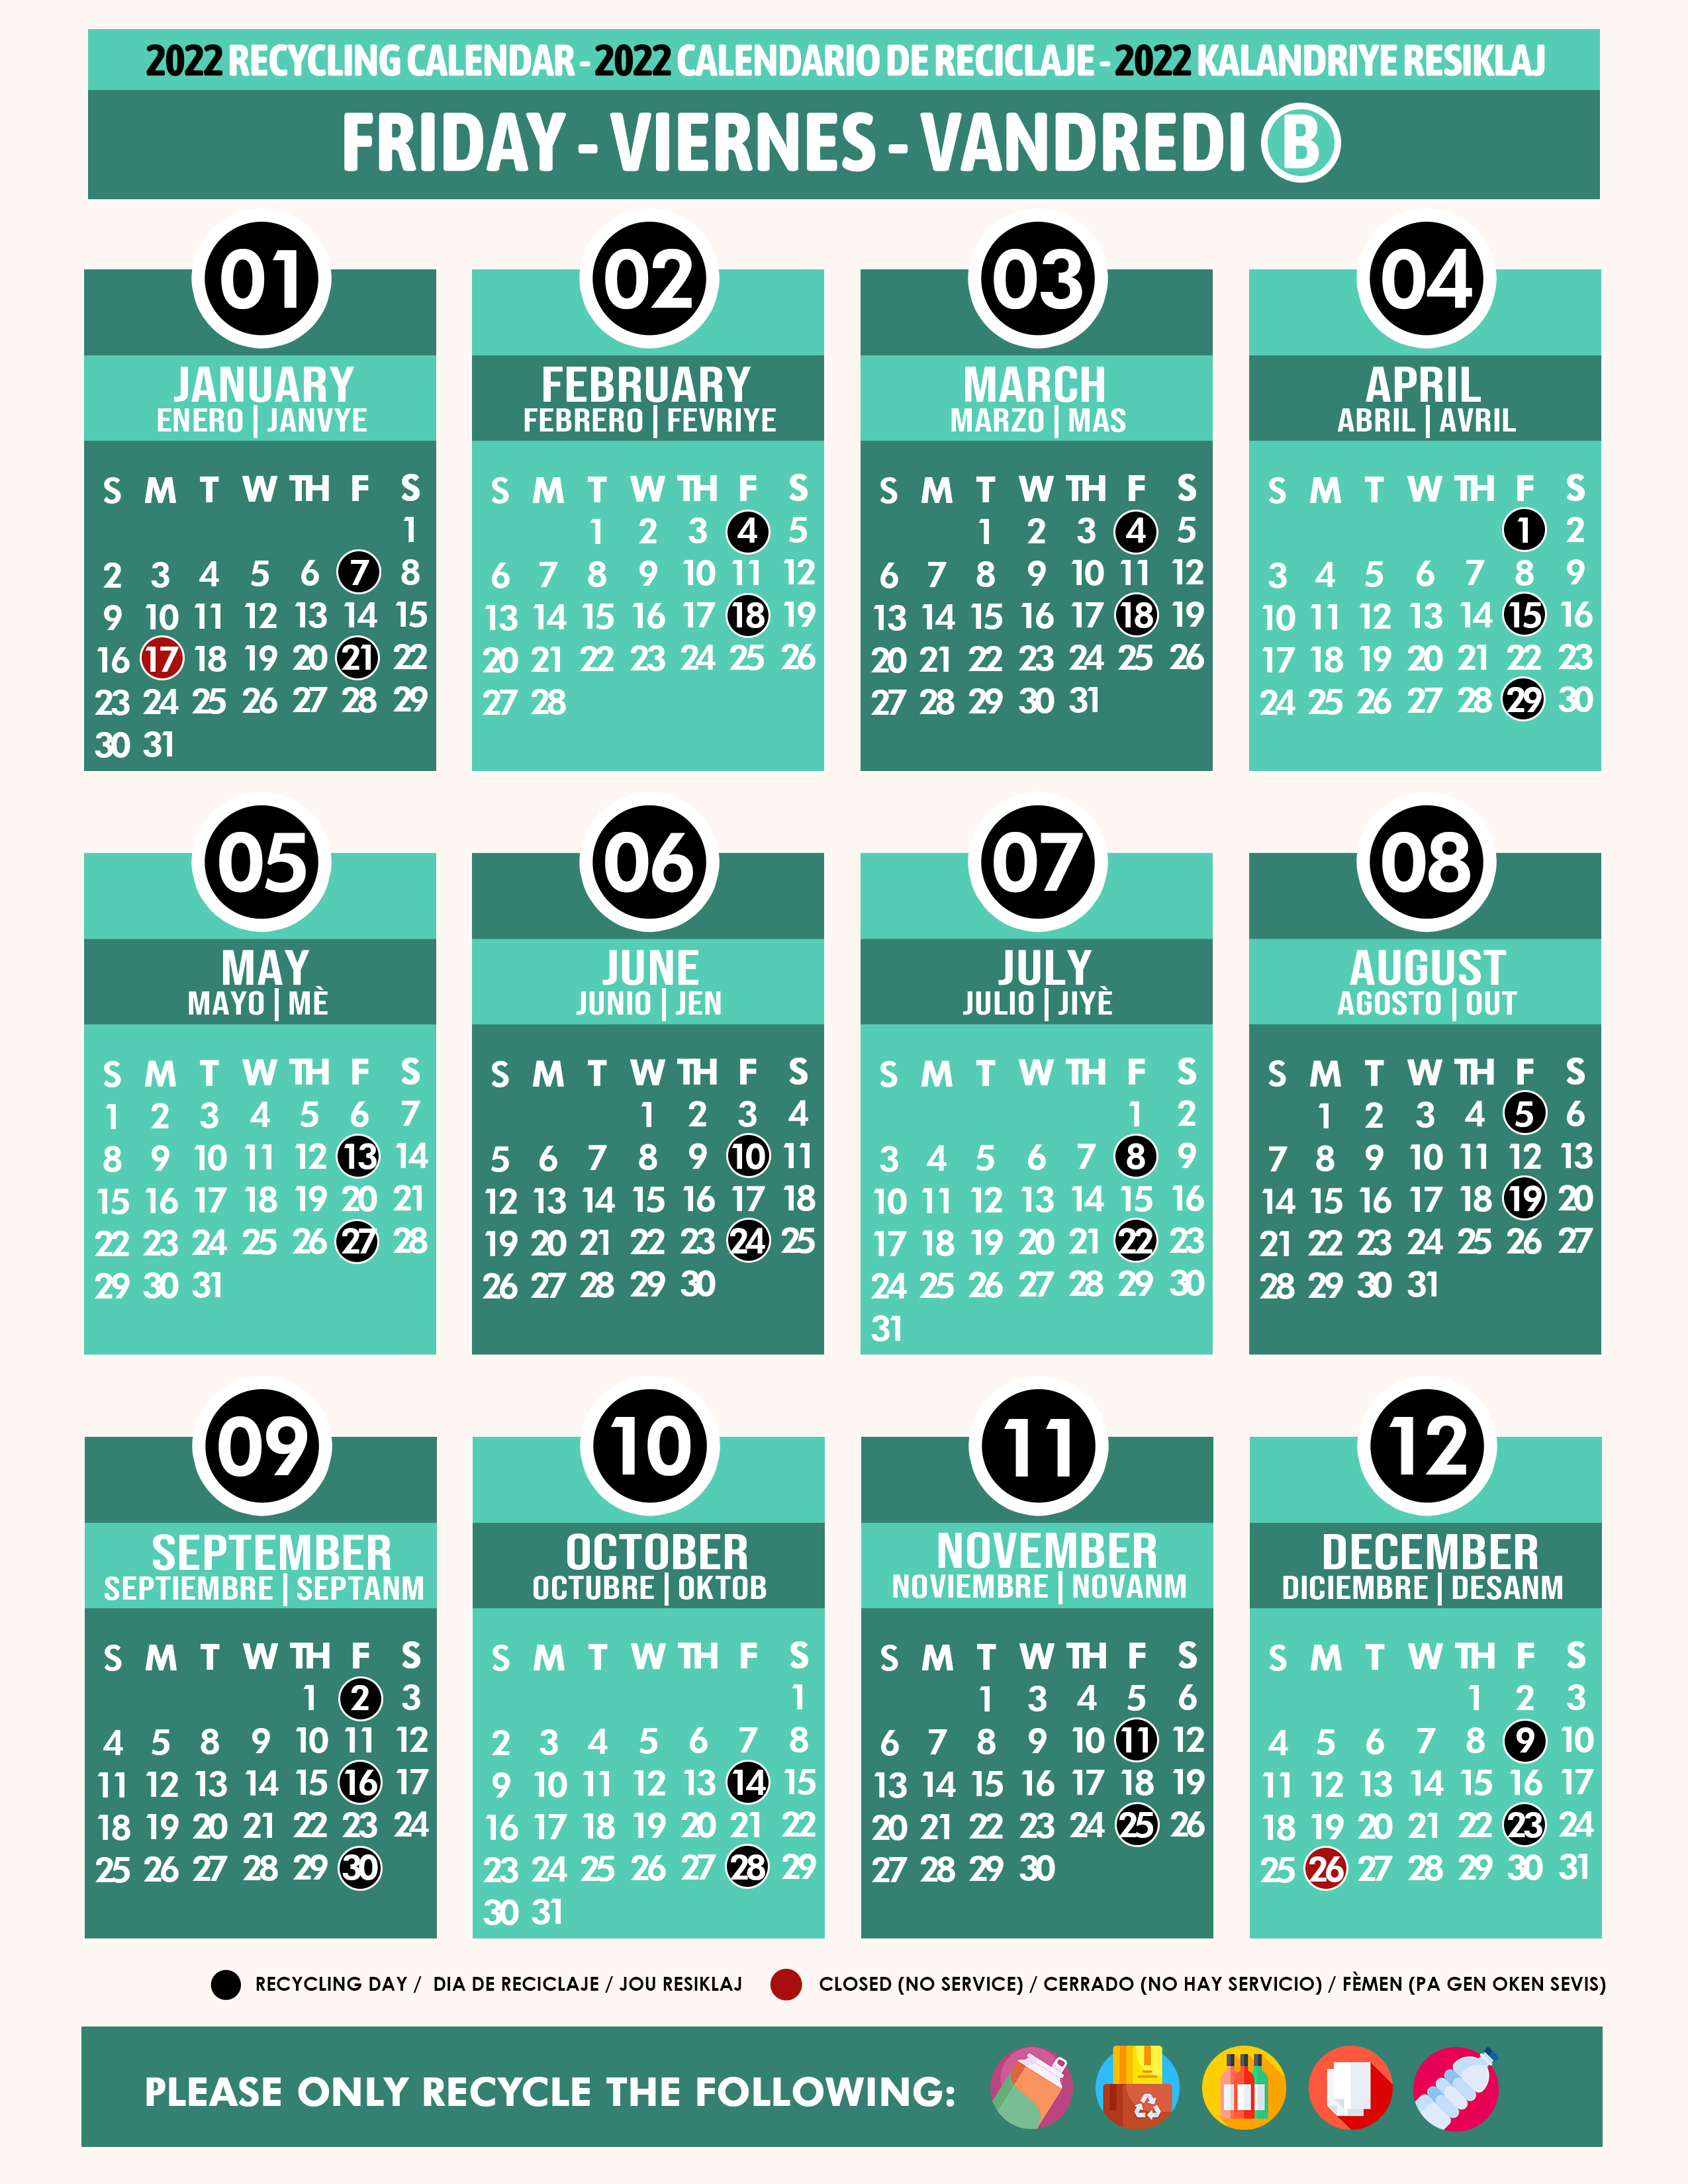 Miami Schedule 2022 Recycling Calendar 2022 Friday B Teal - Miami